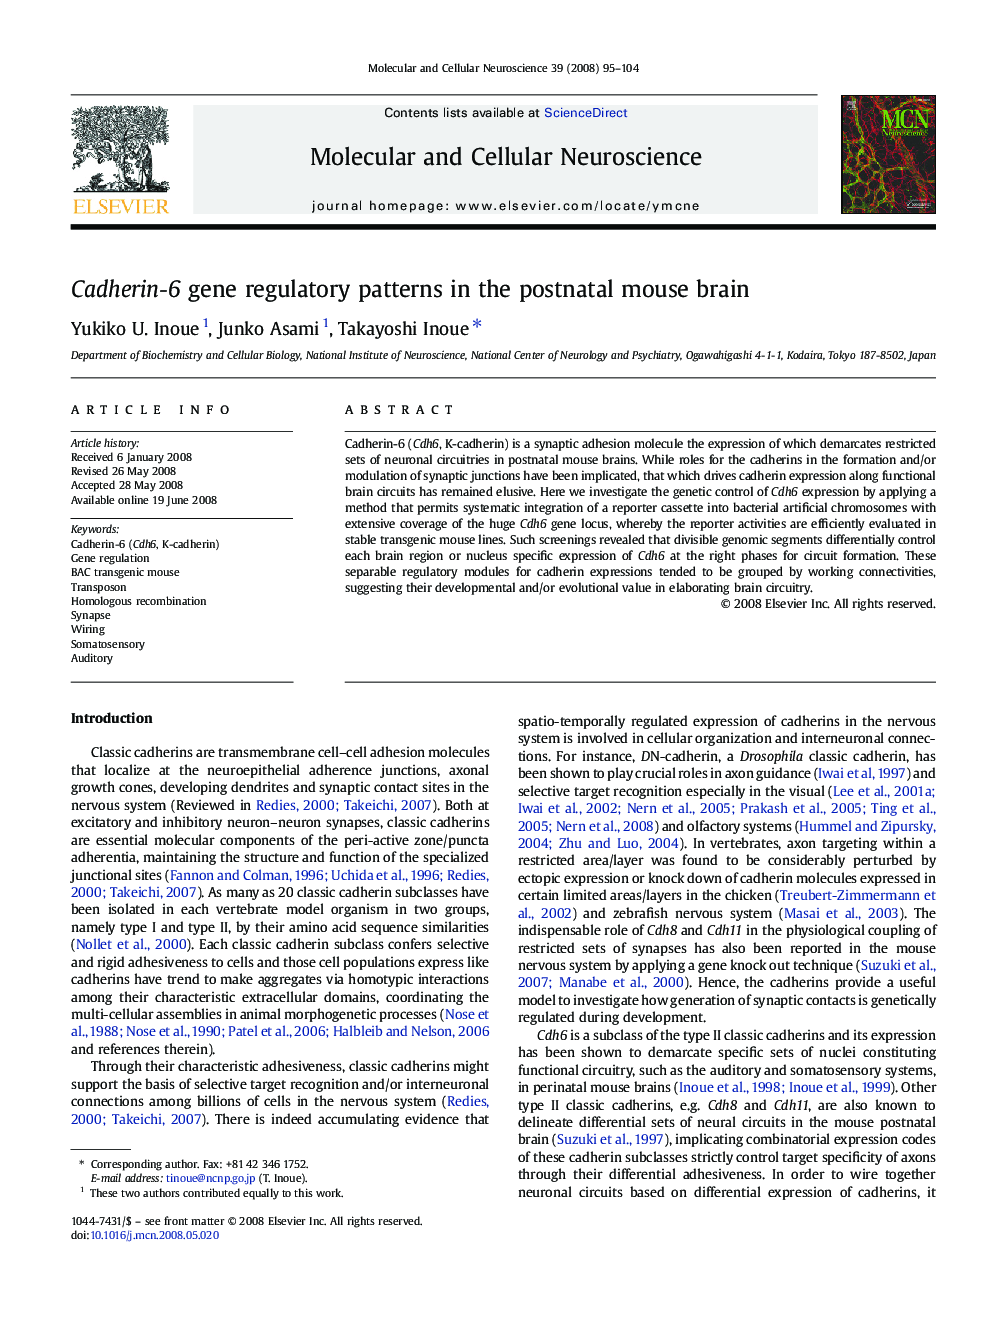 Cadherin-6 gene regulatory patterns in the postnatal mouse brain